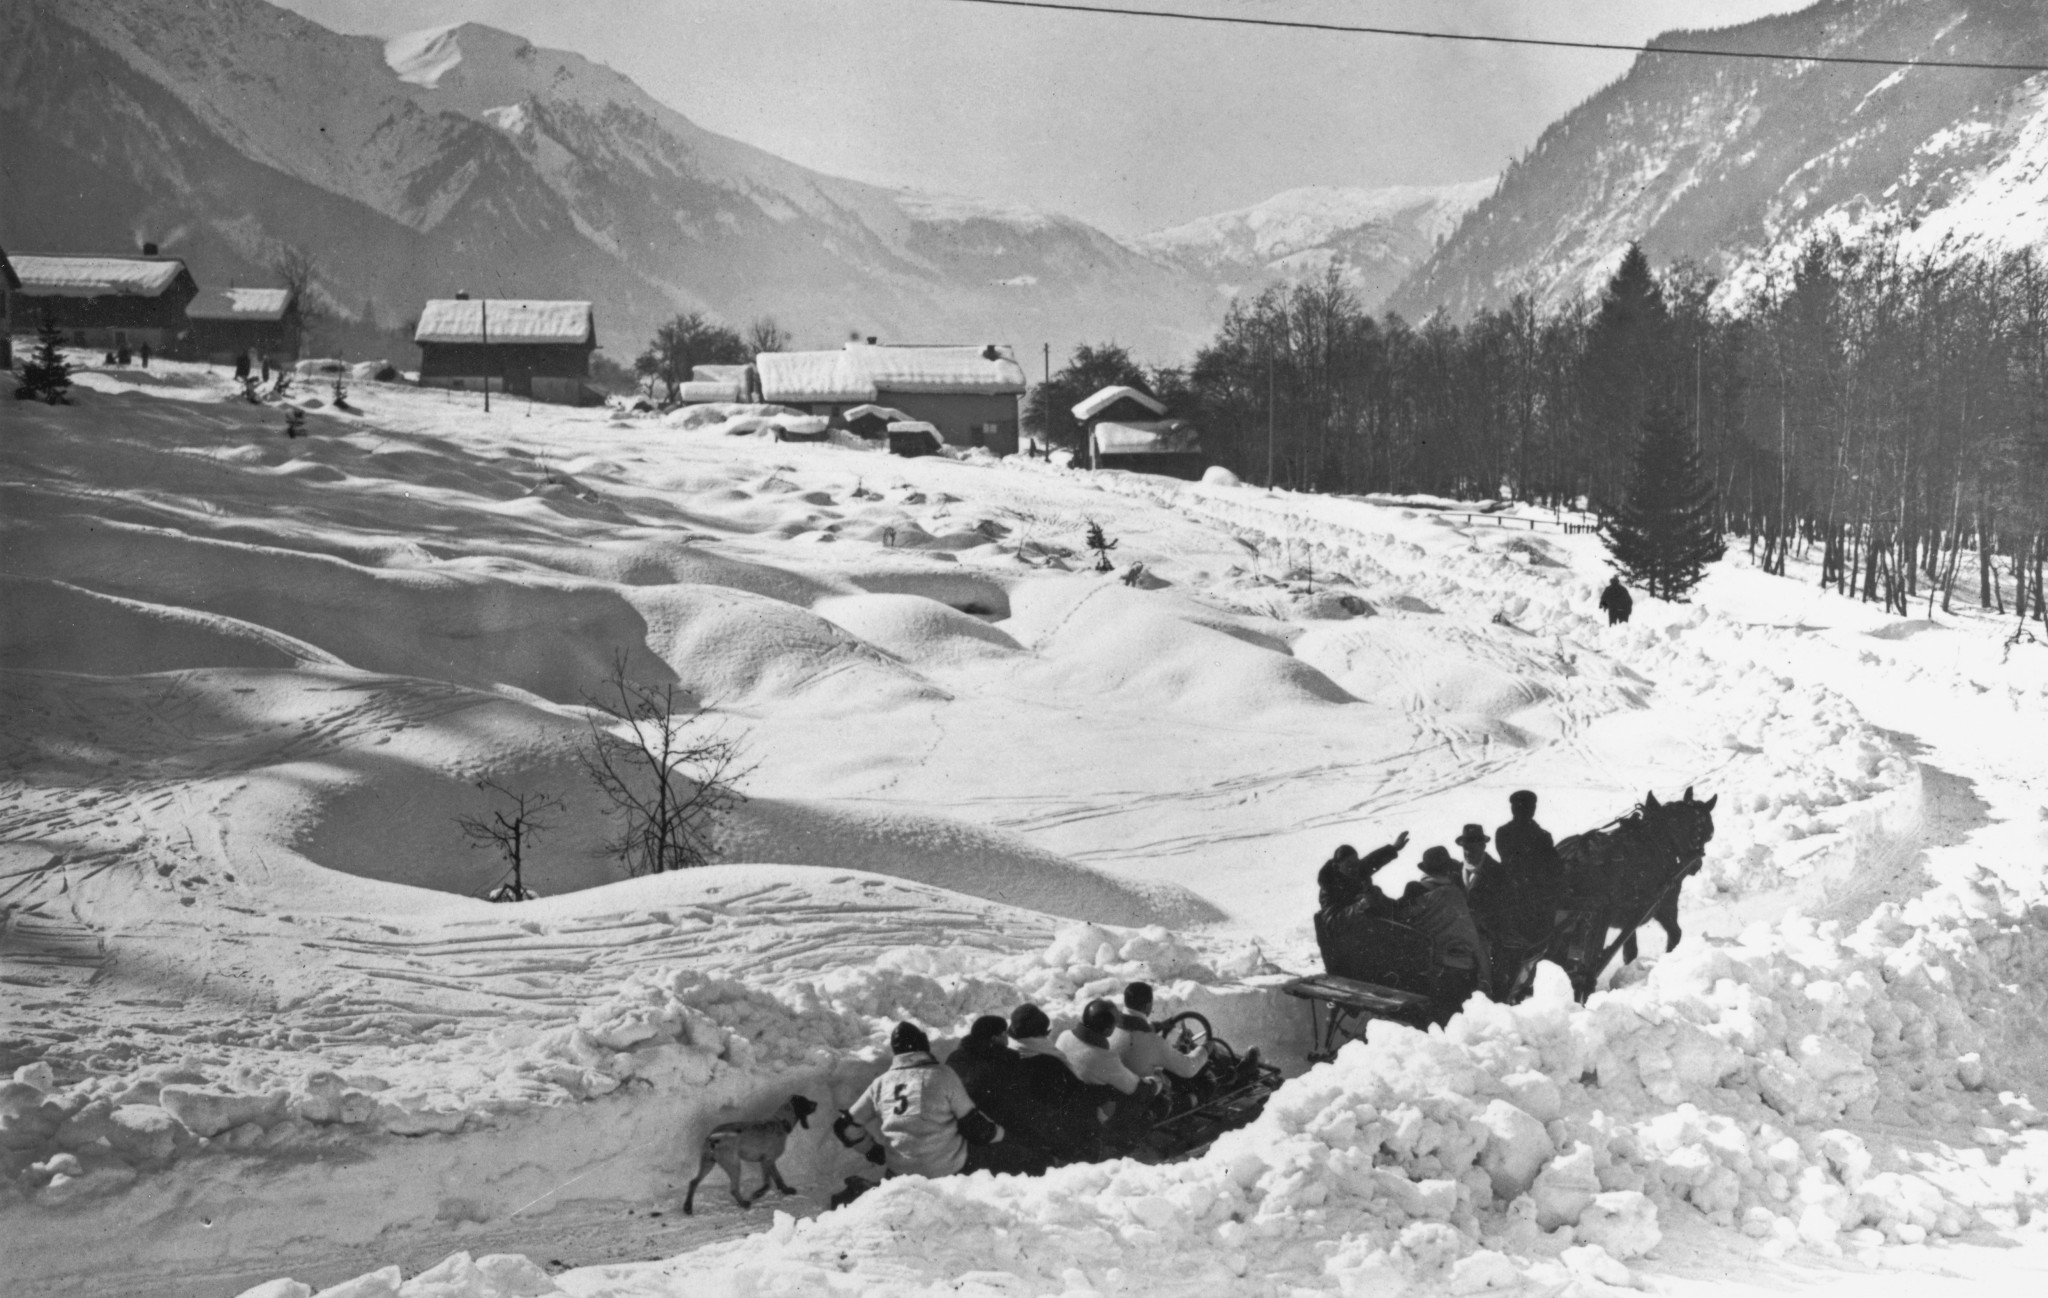 Winter sports week in Chamonix in 1924 was regarded as the first 